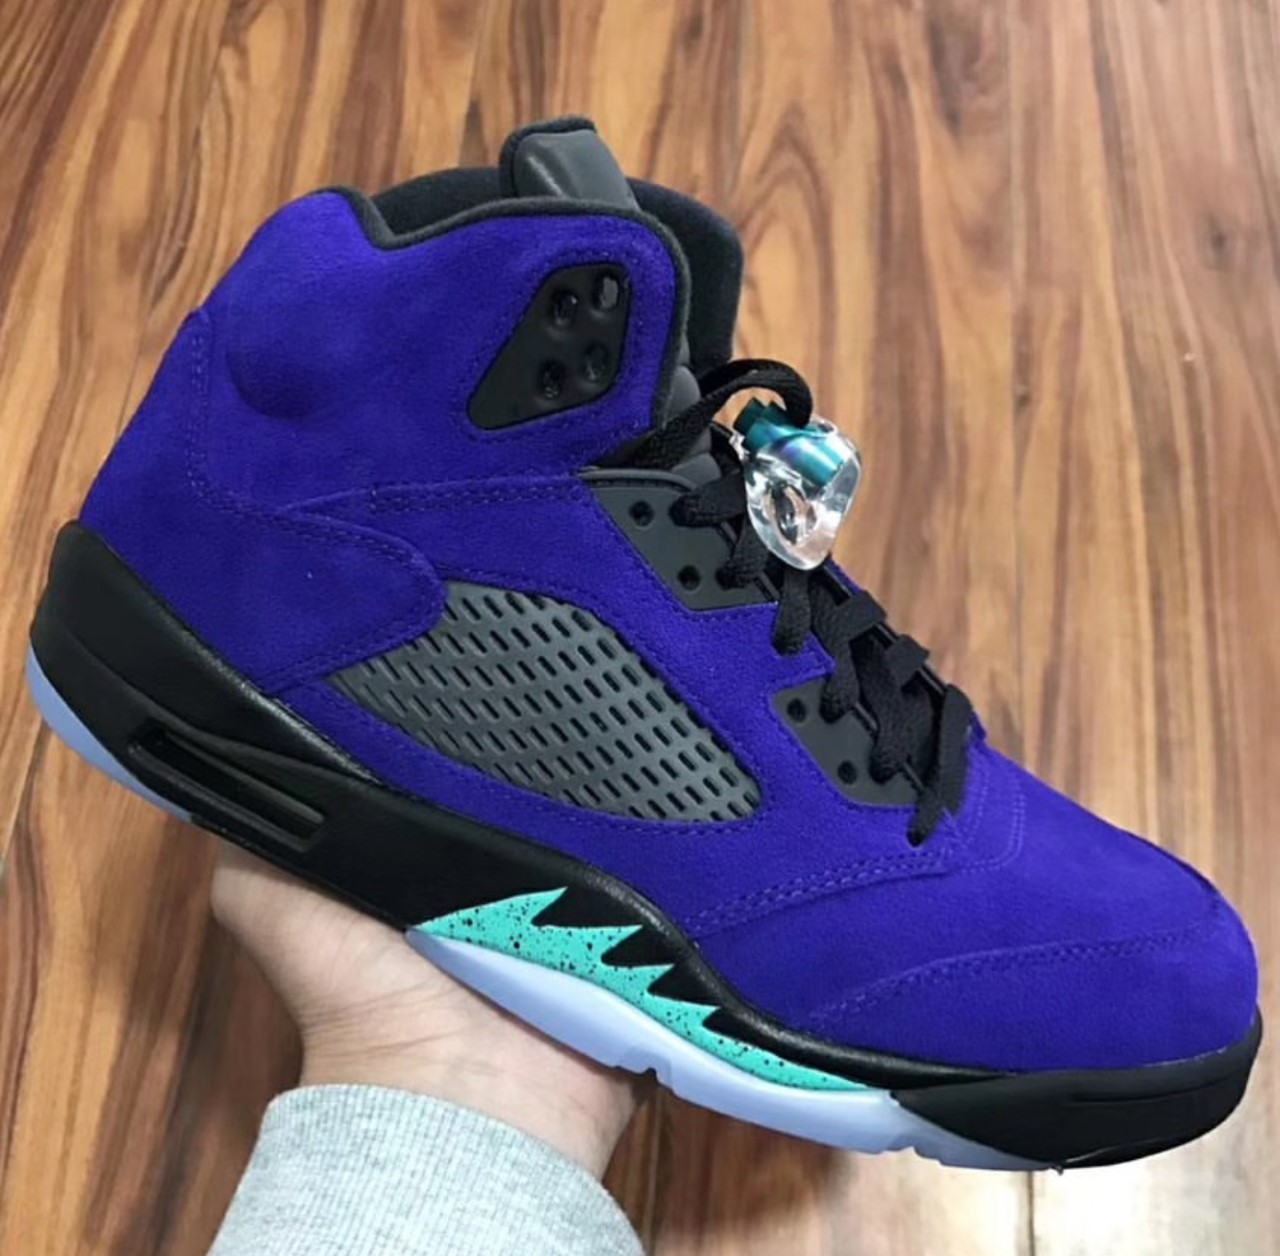 First Look At The Air Jordan 5 Retro "Alternate Grape" Sneaker Buzz